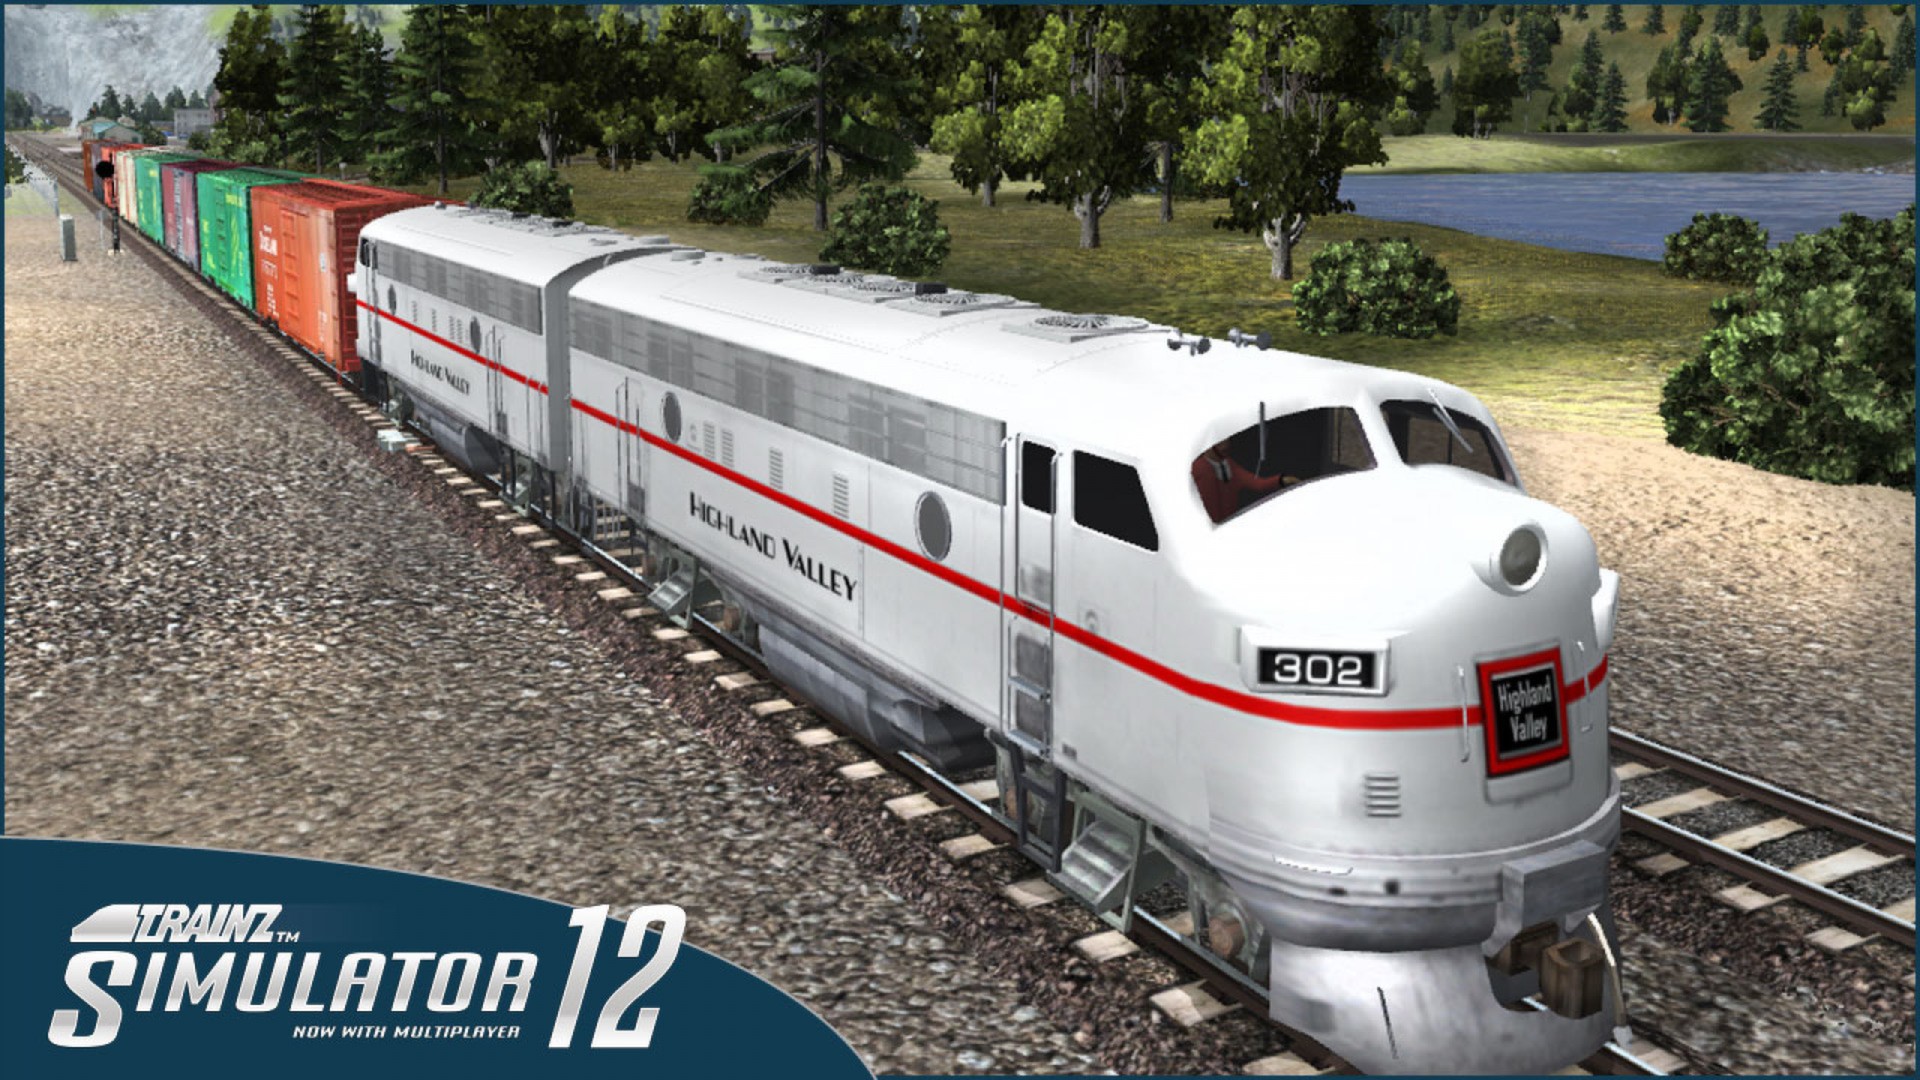 download train simulator indonesia 2012